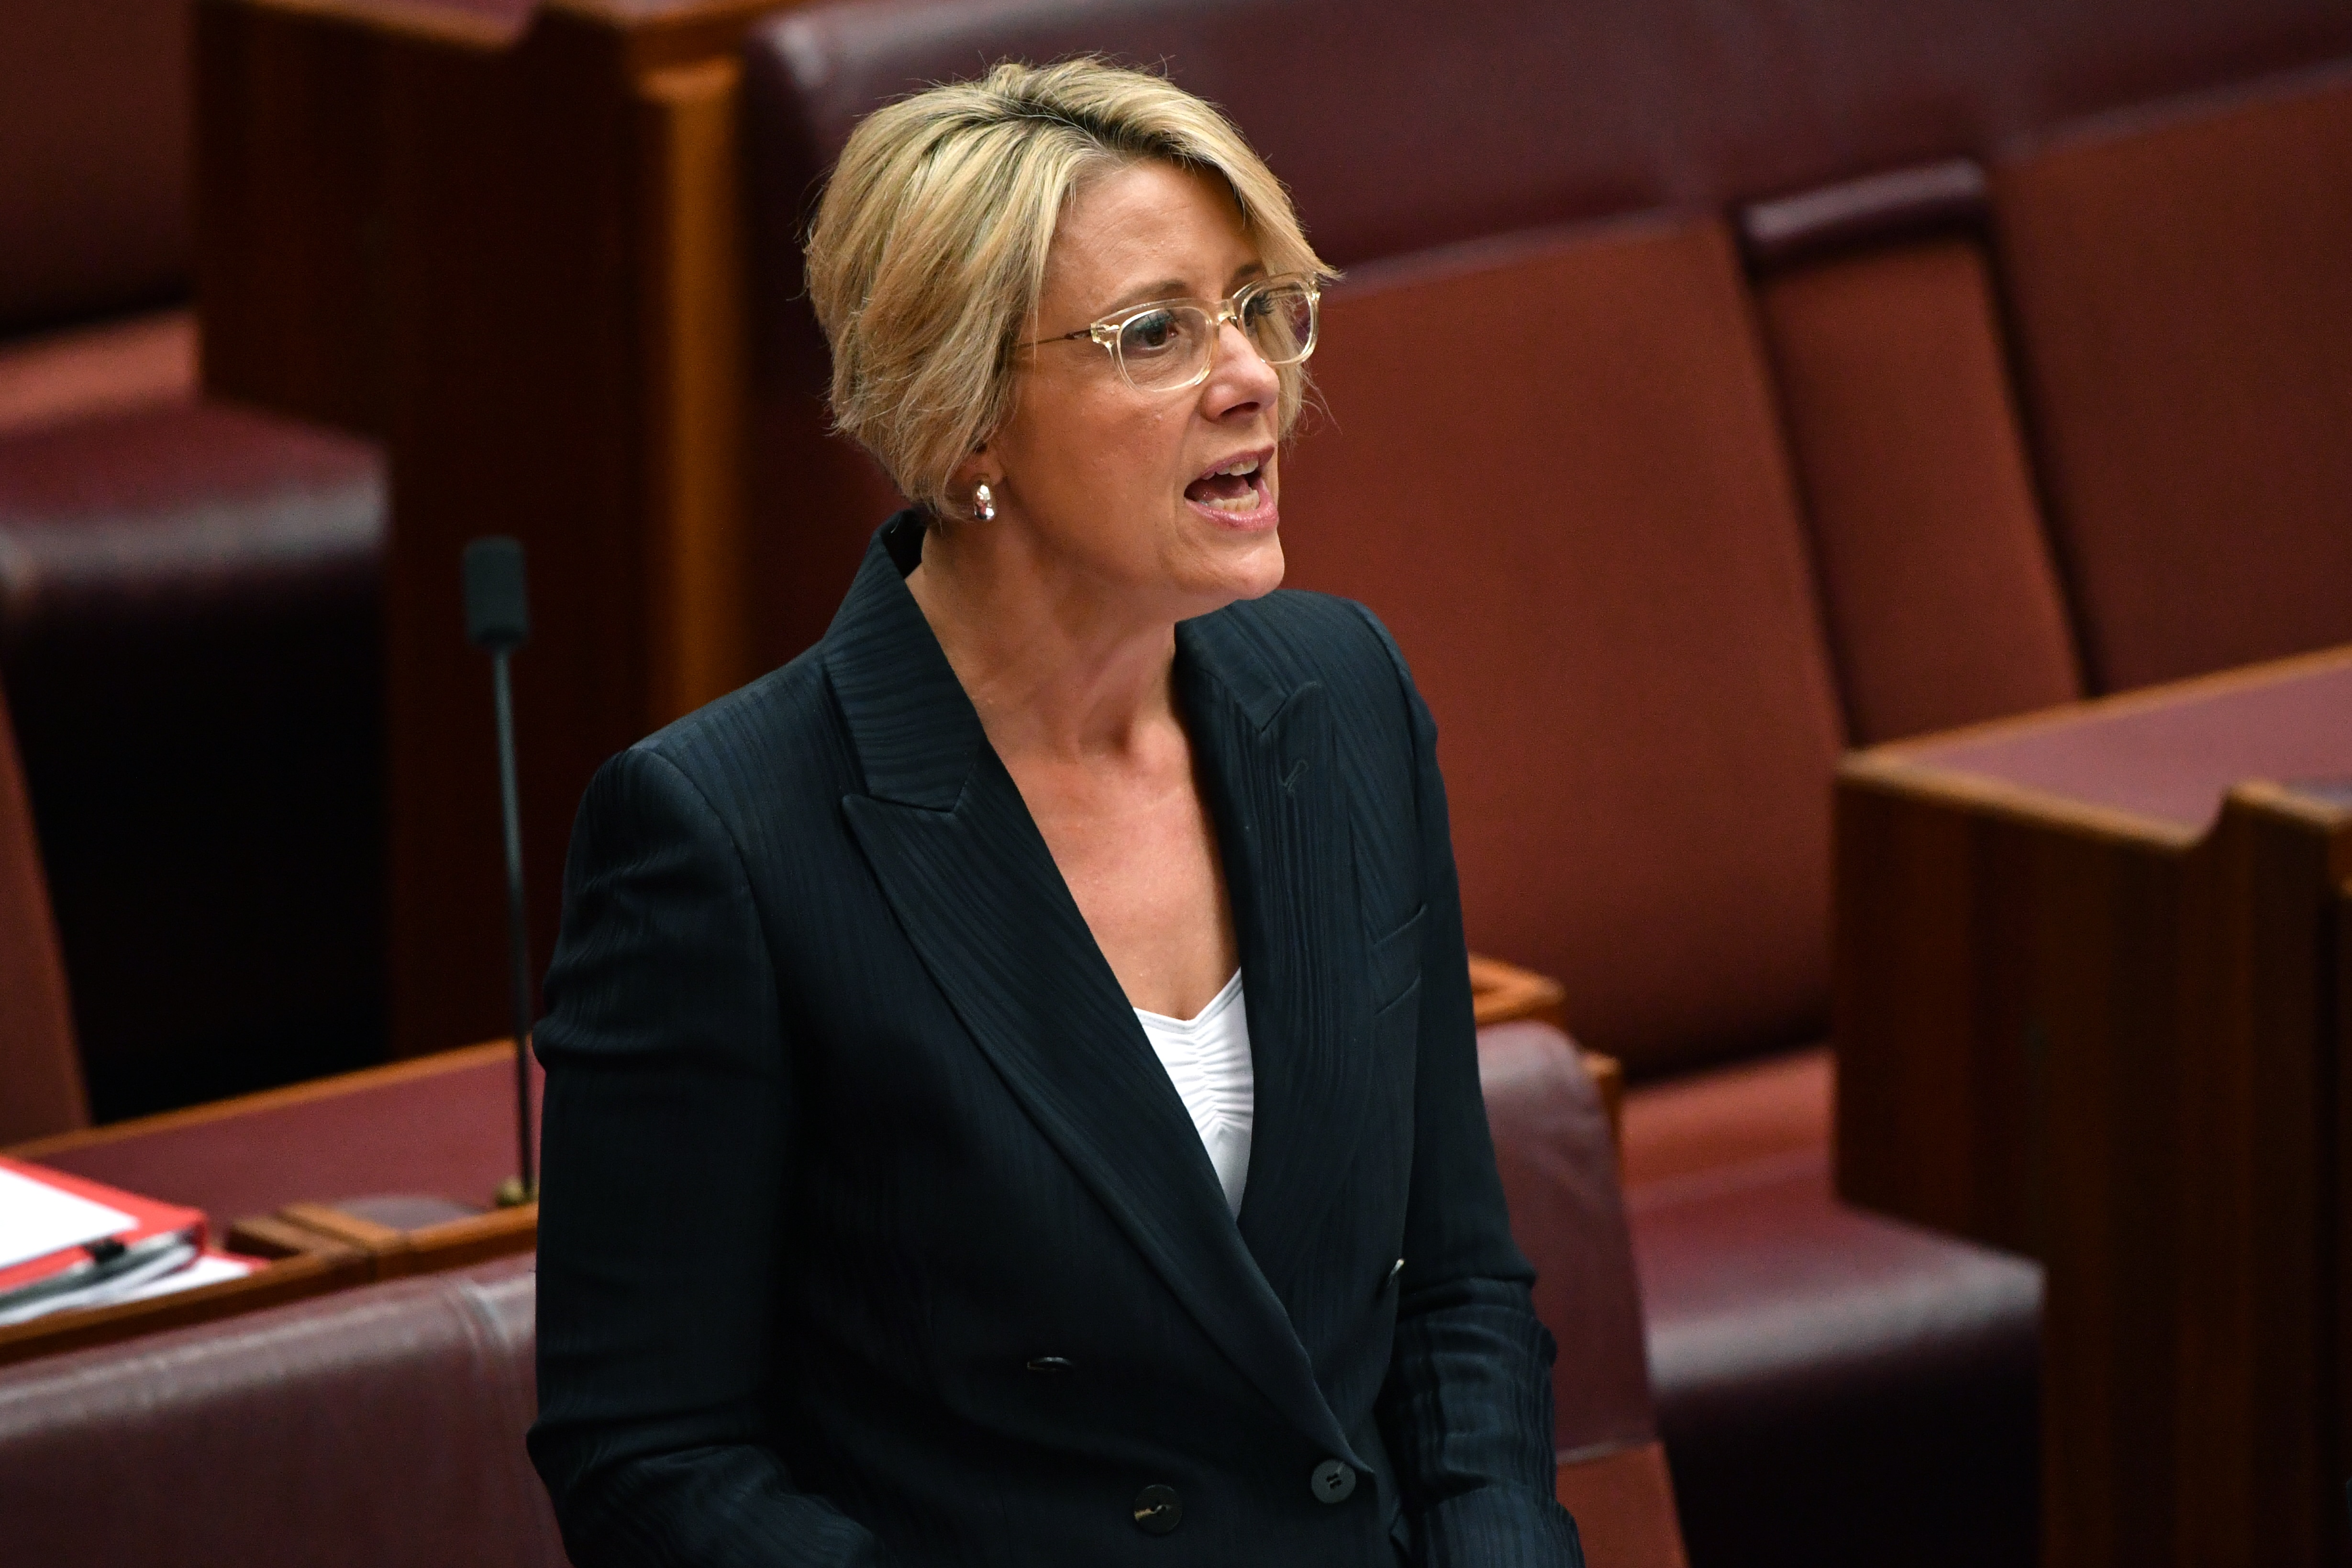 Australia Has Become Over Reliant On Temporary Migrants Kristina Keneally Warns